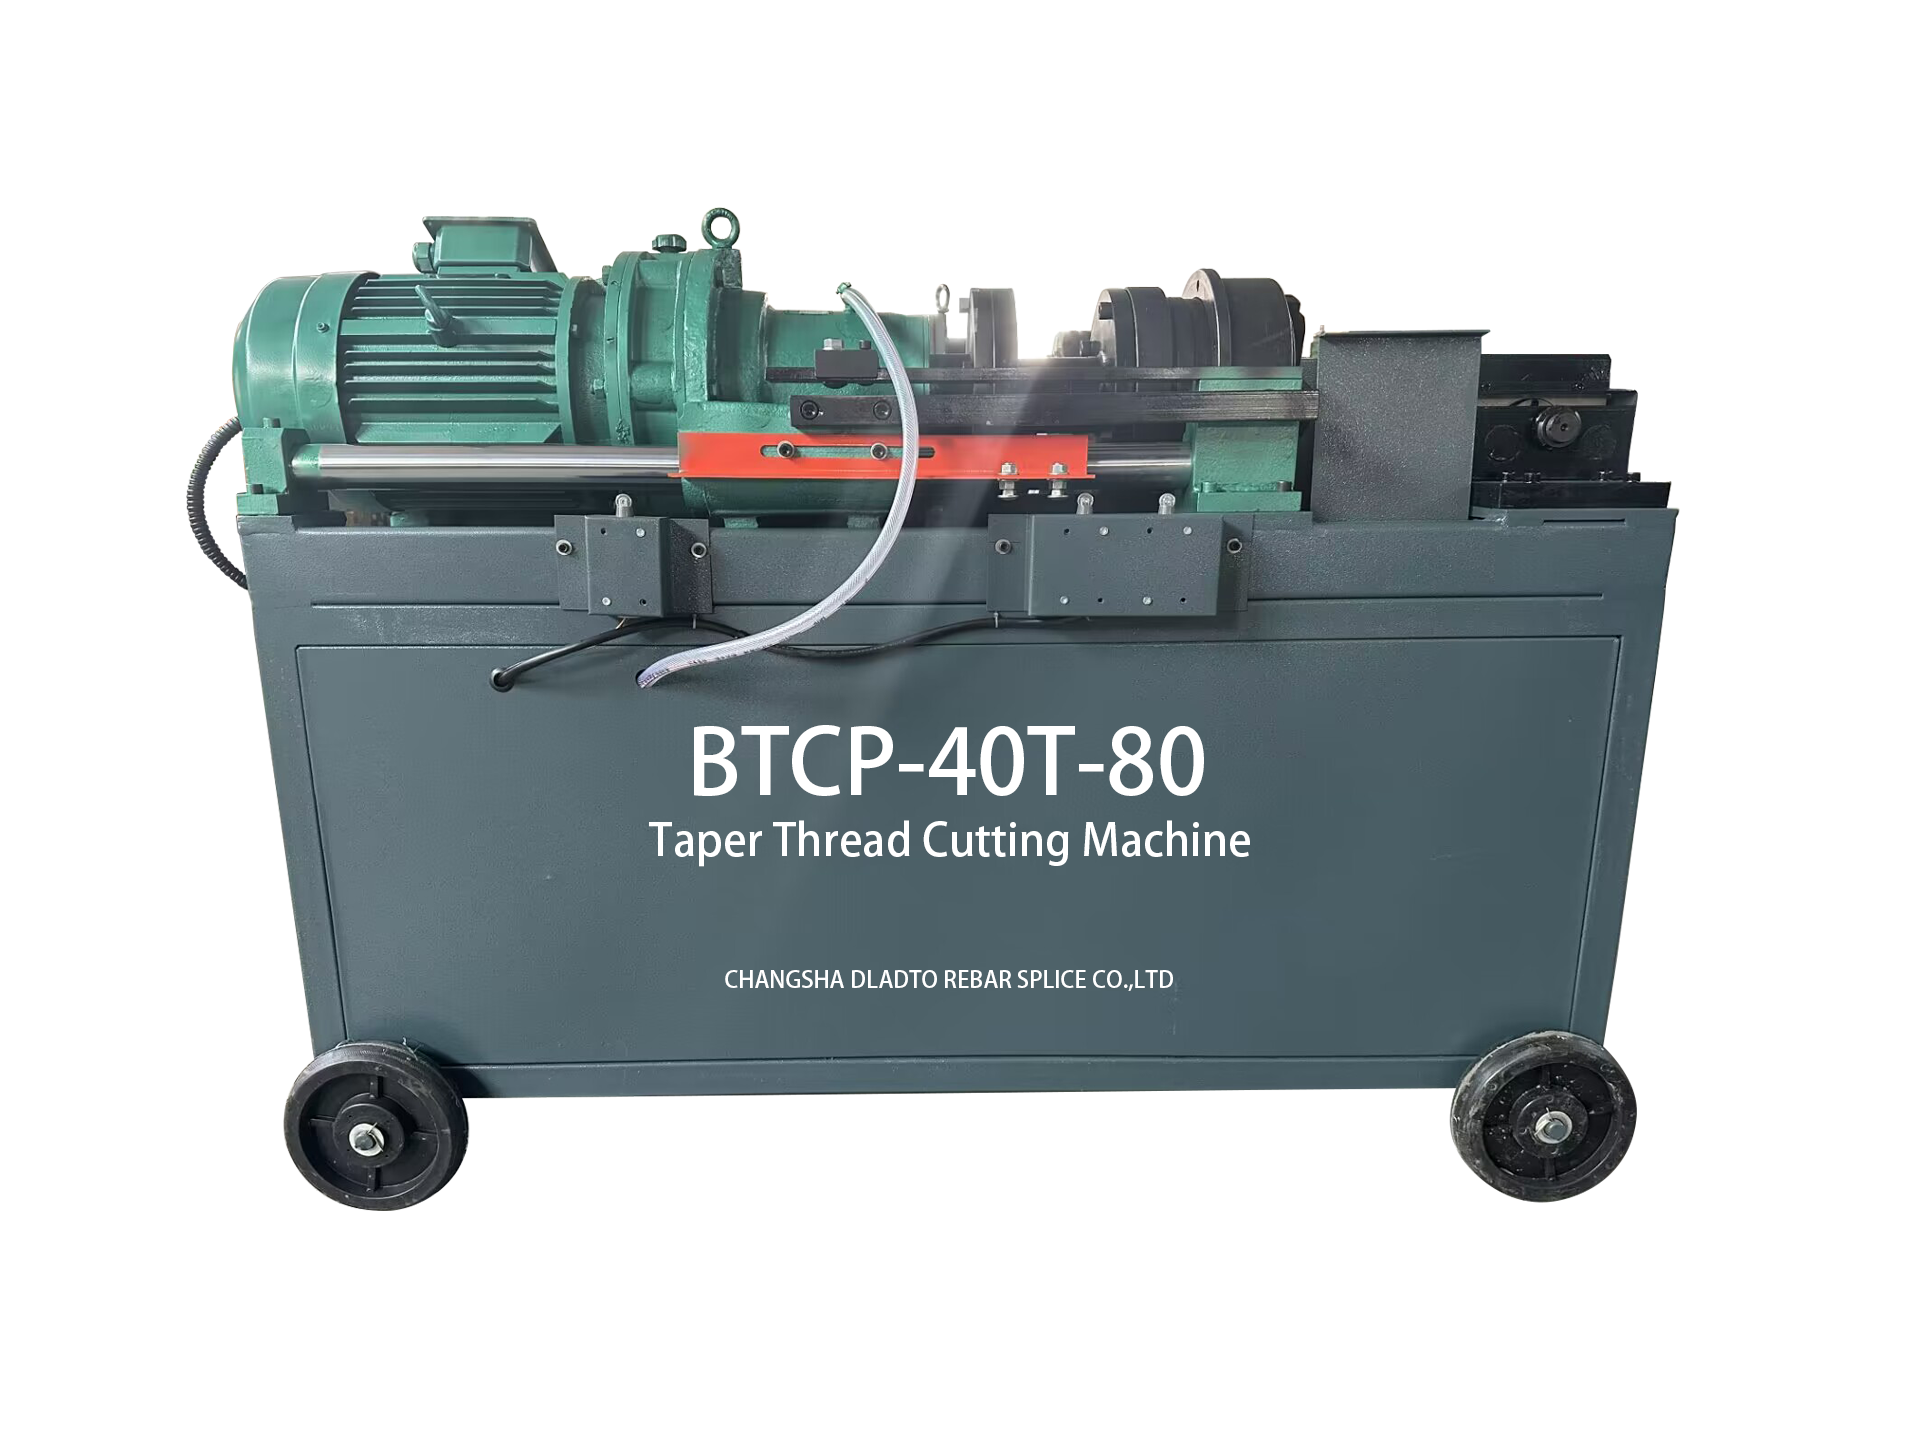 Rebar Taper Threading Cutting Machine BTCP-40T-80